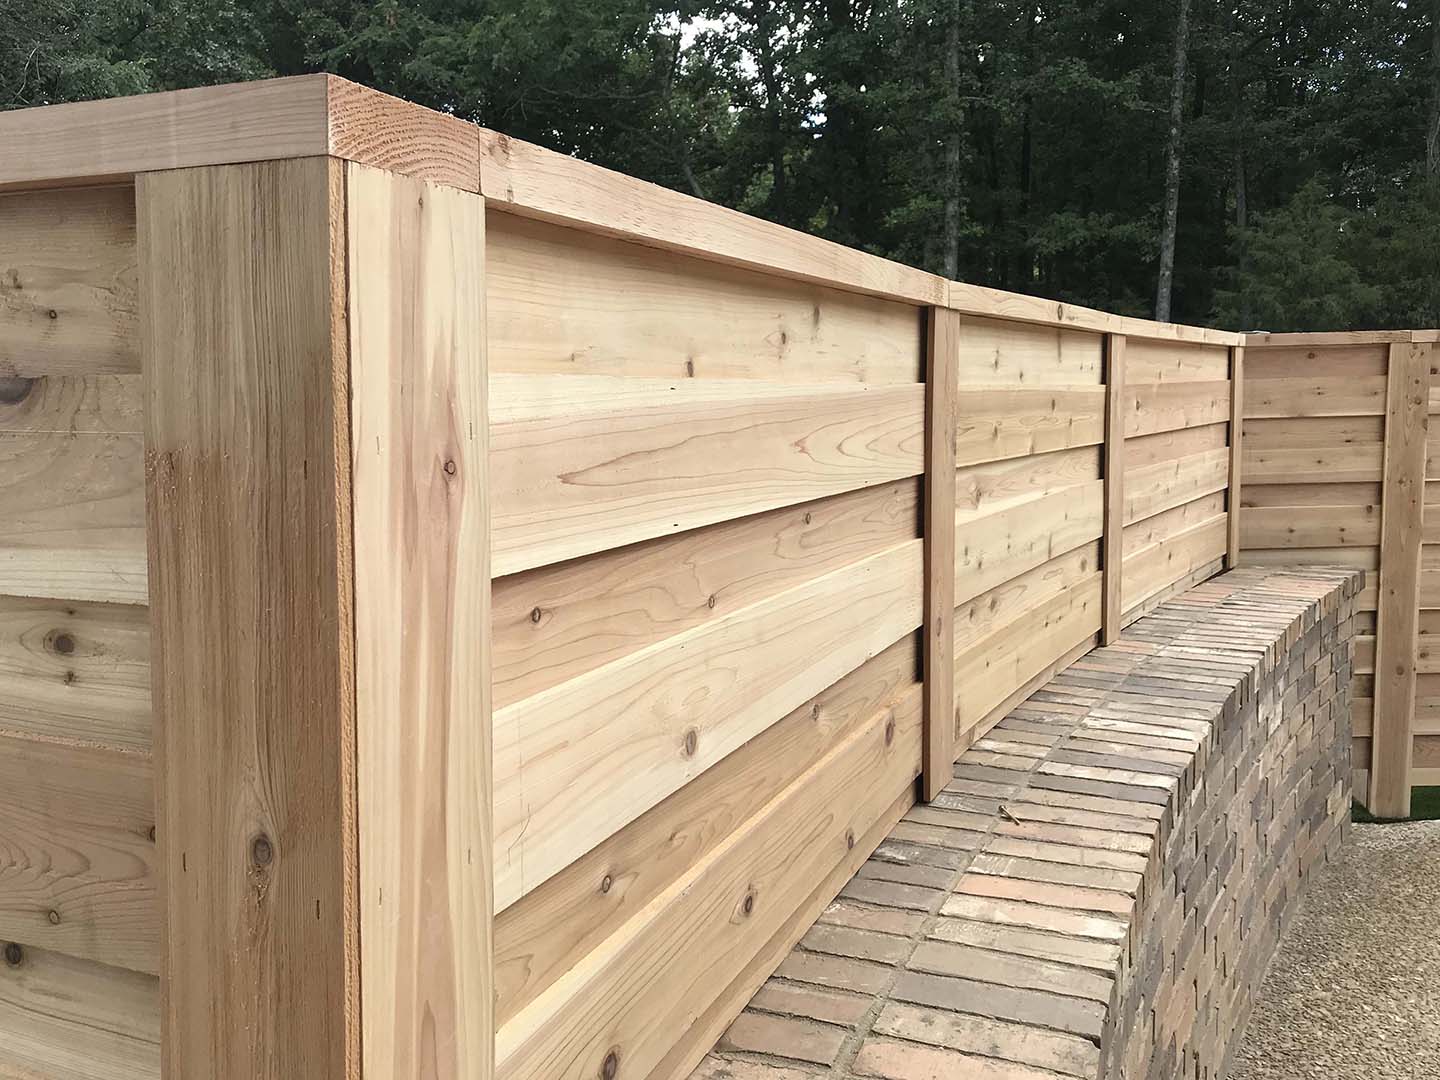 Brenham TX cap and trim style wood fence